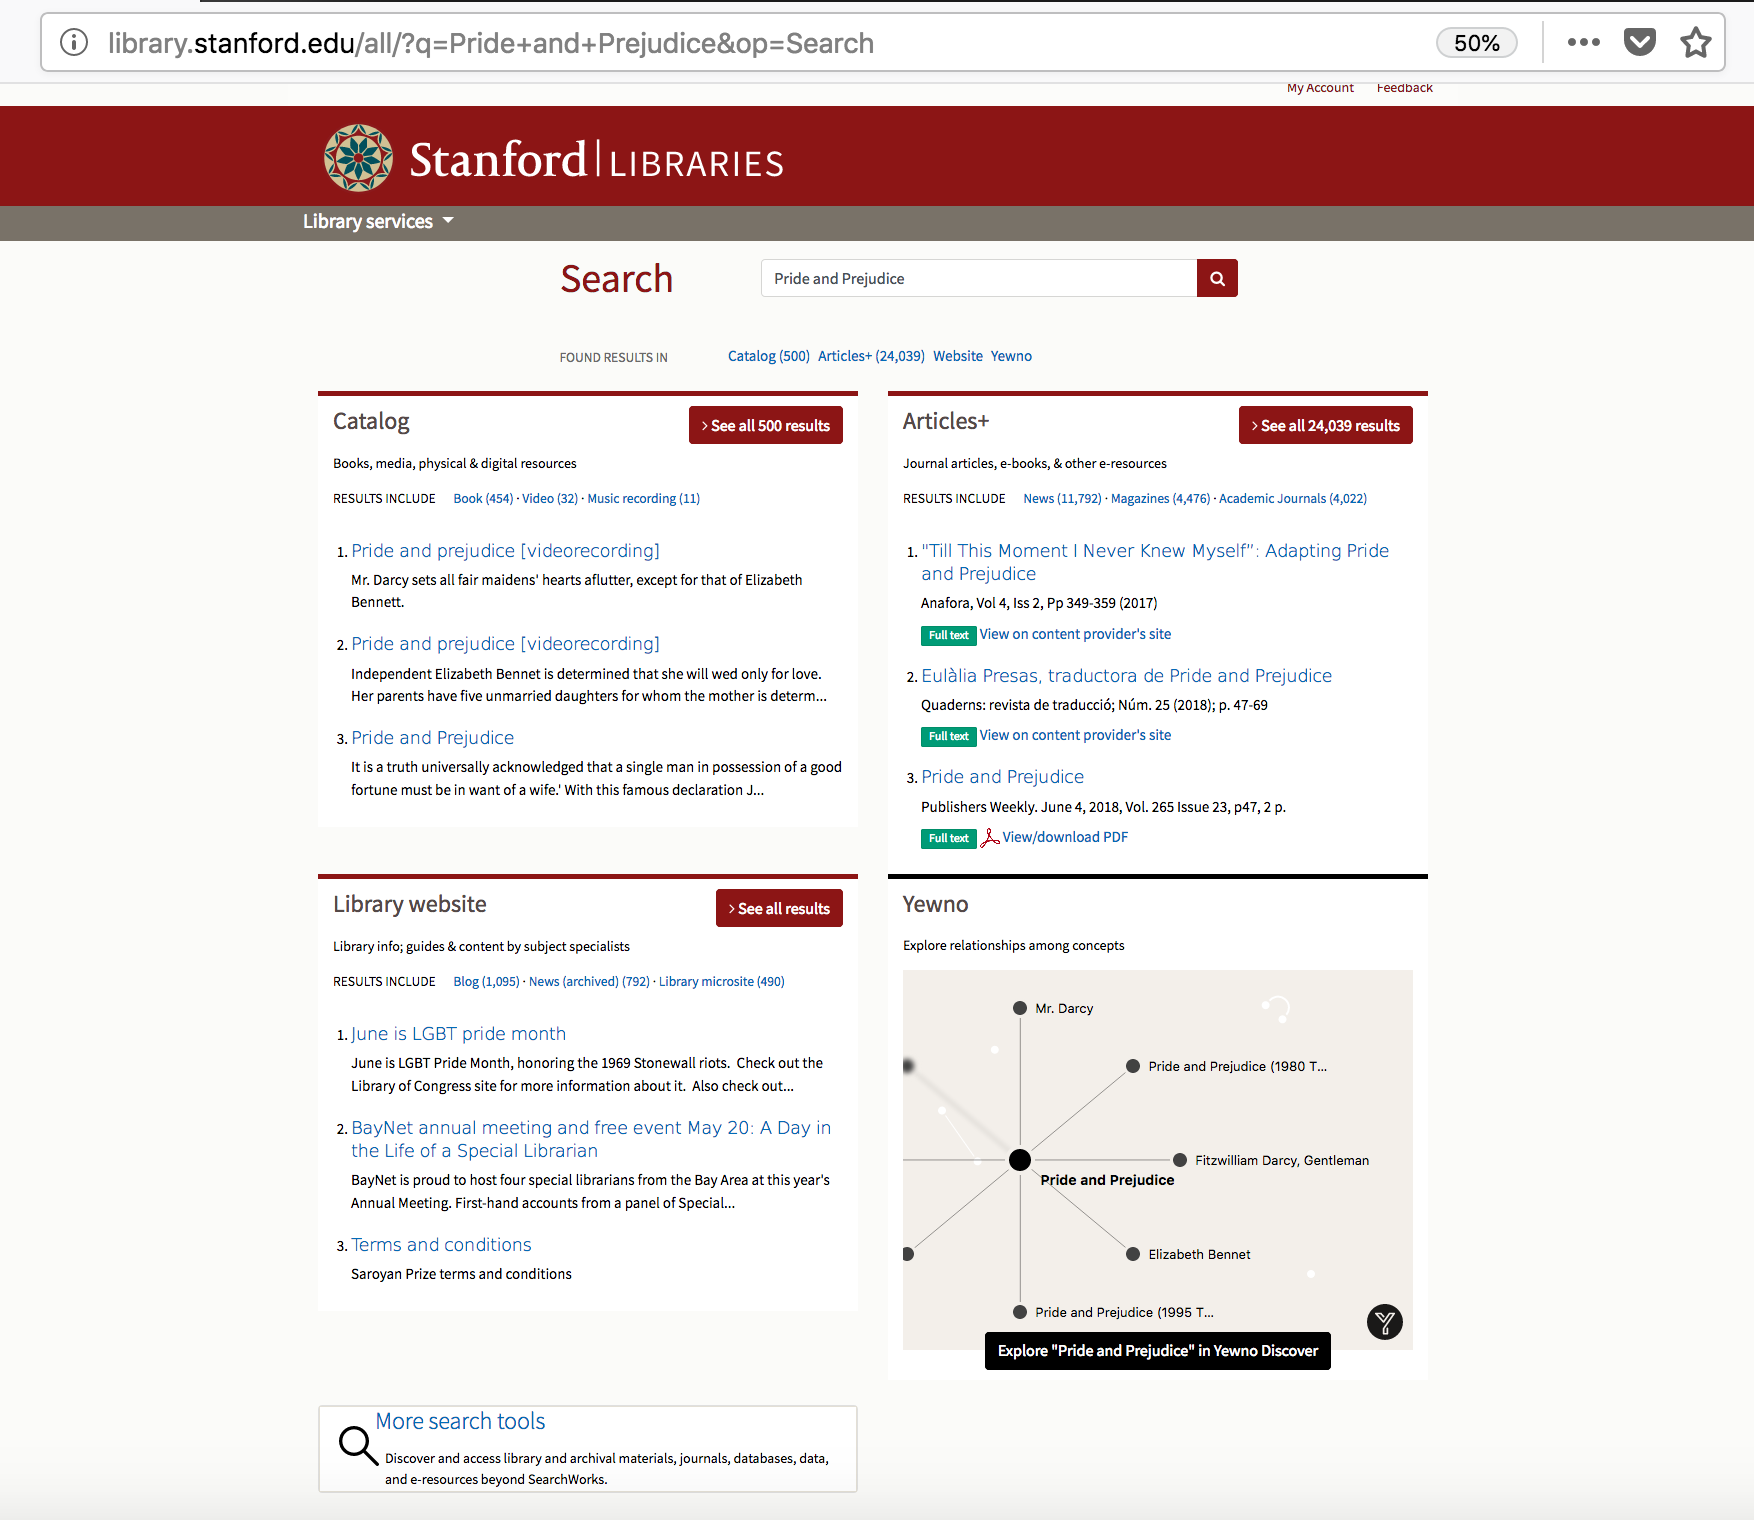 Stanford Searchworks Display of Pride and Prejudice